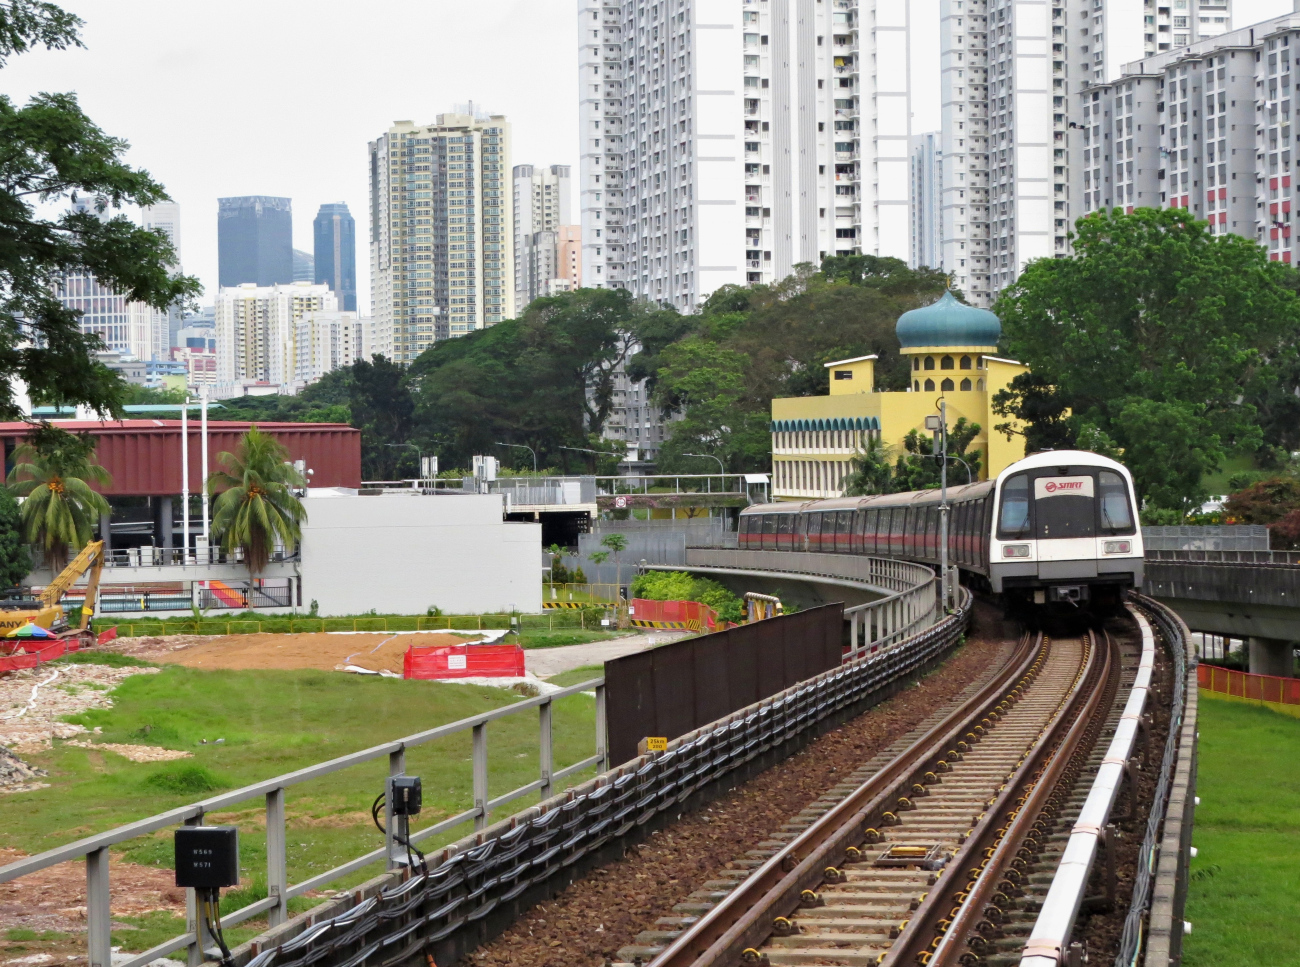 Singapore, Kawasaki Heavy Industries C151 # 3091; Singapore — Metro — [2] East West Line (EWL)